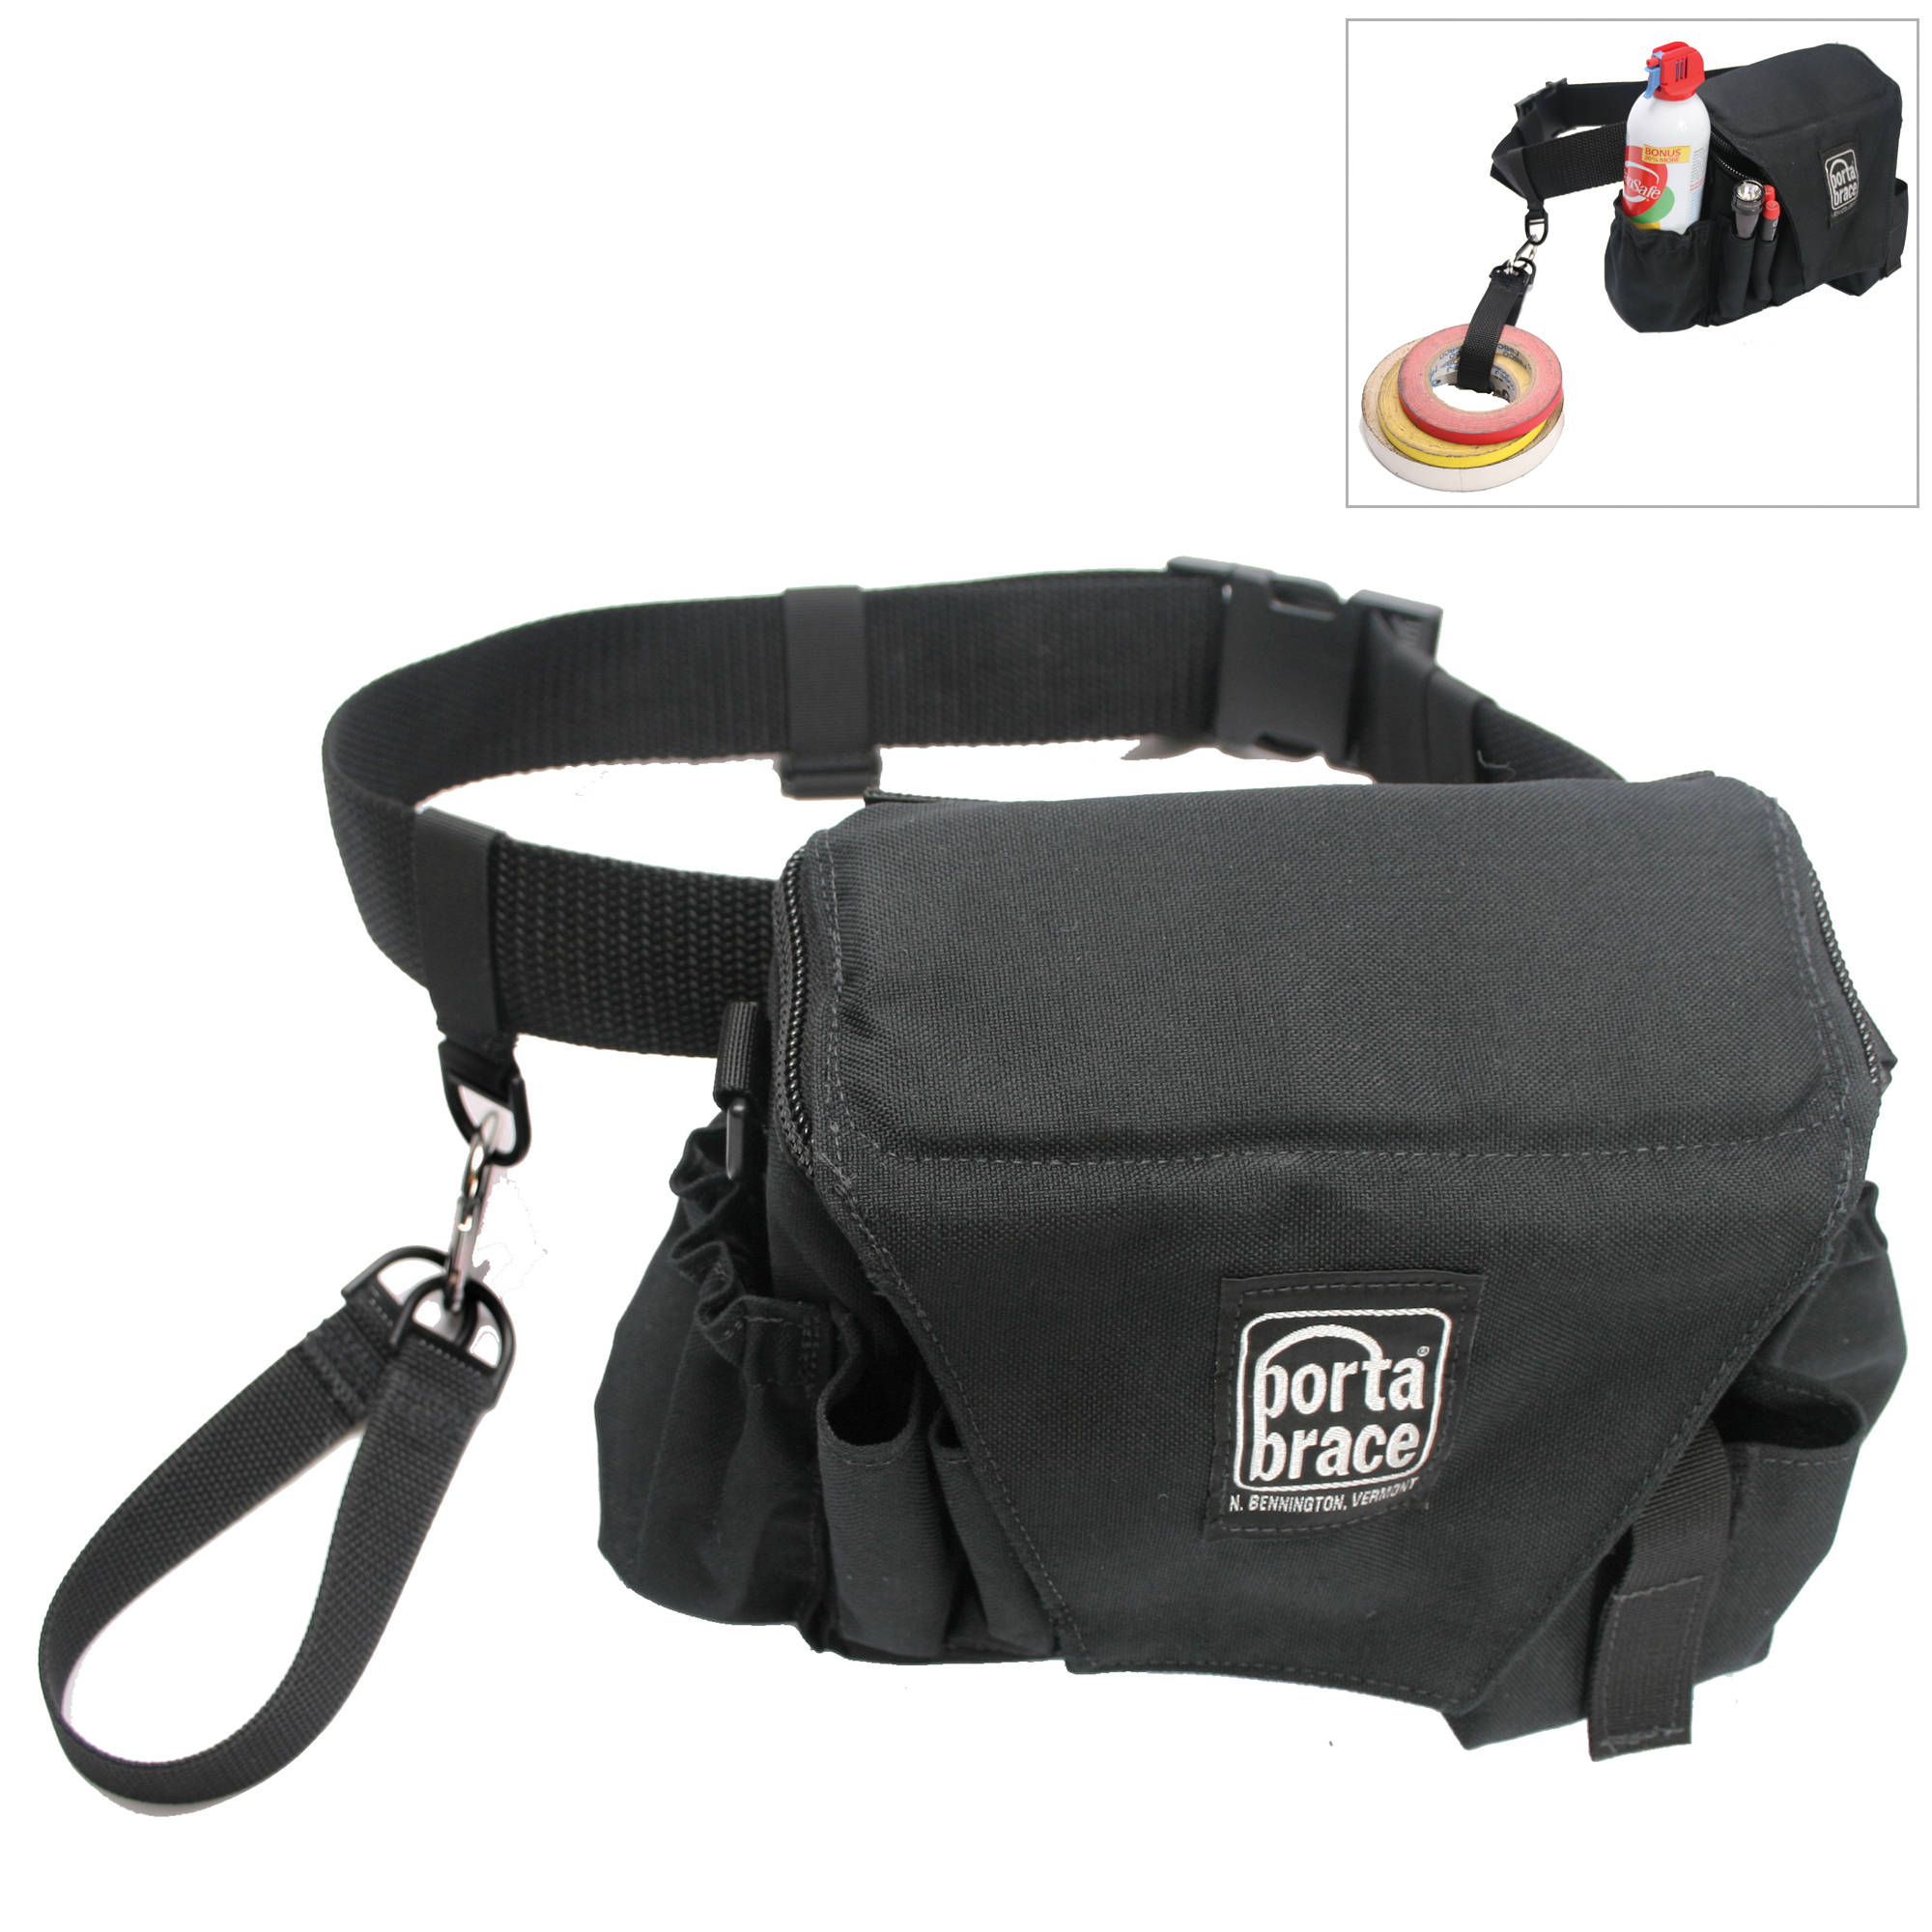 camera pouch bag